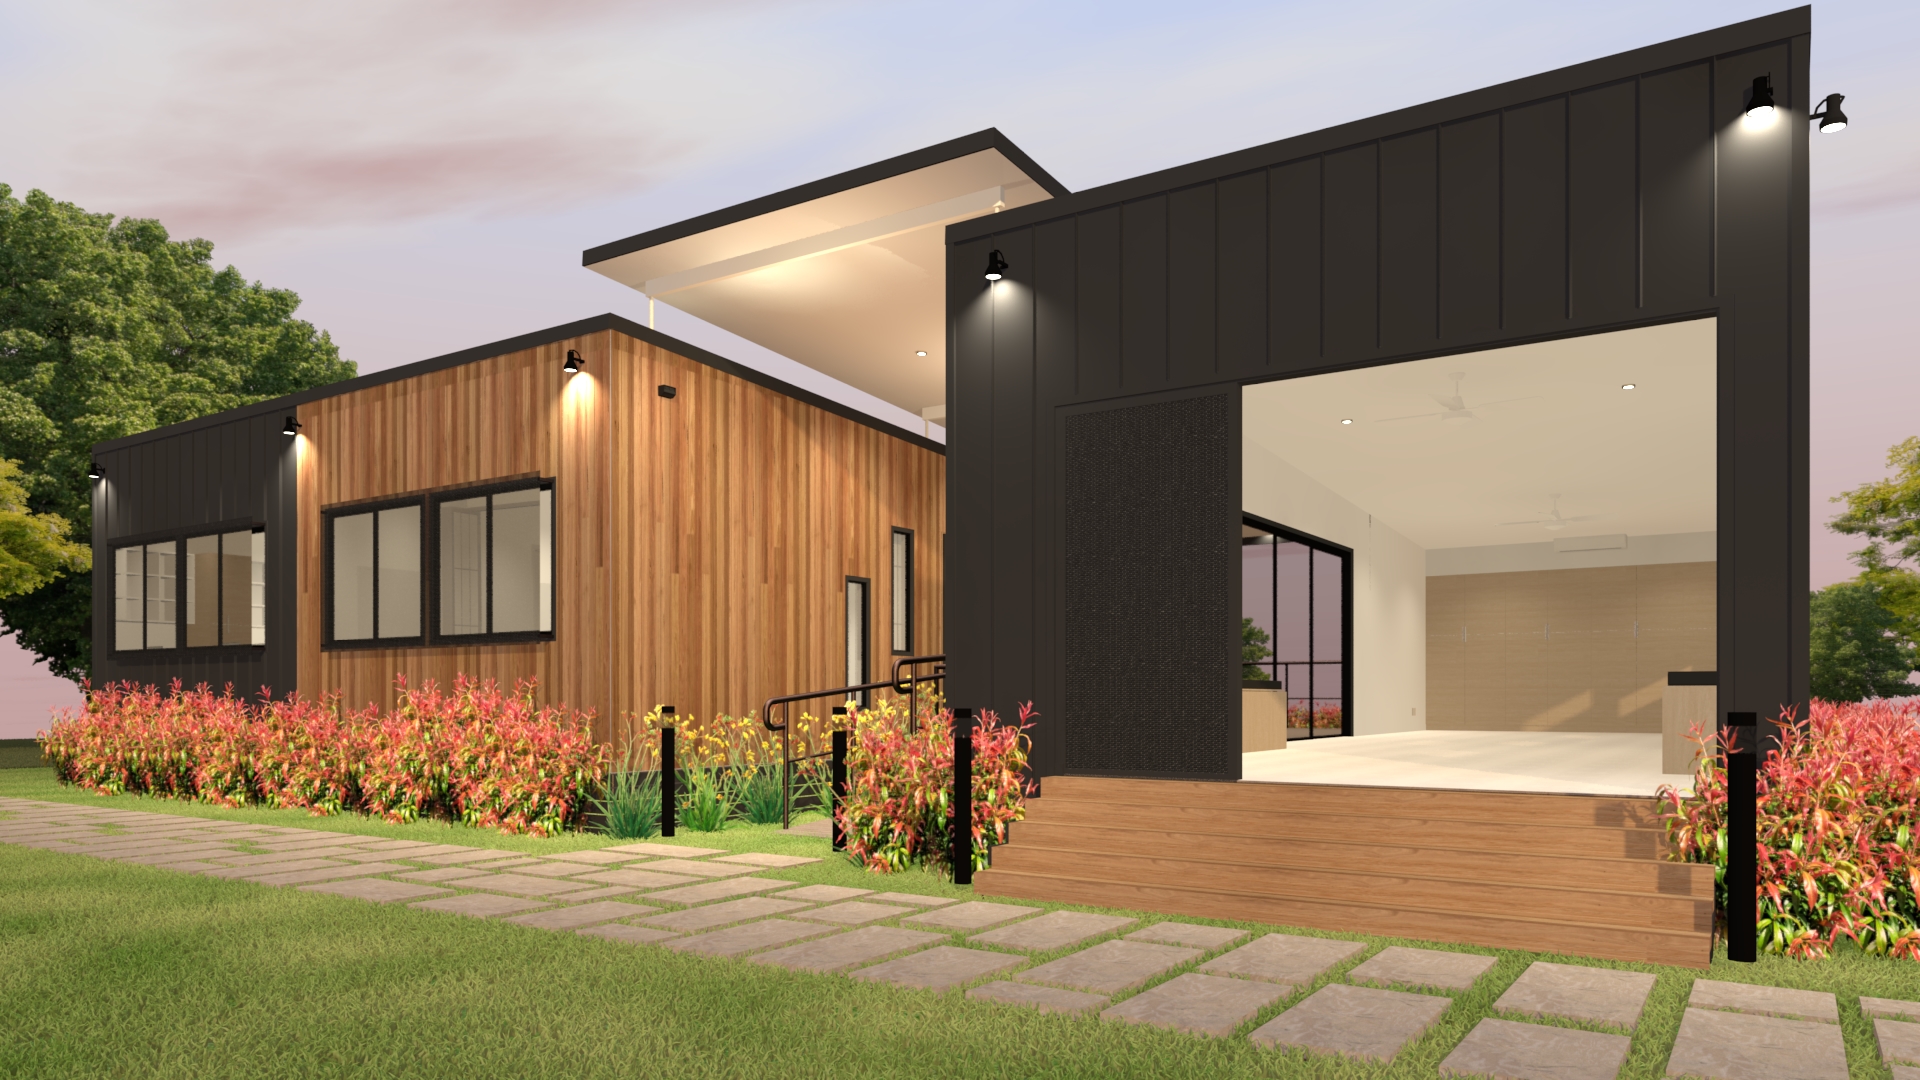 HOMElife Pods Commercial building design with flyover facade for a modular building